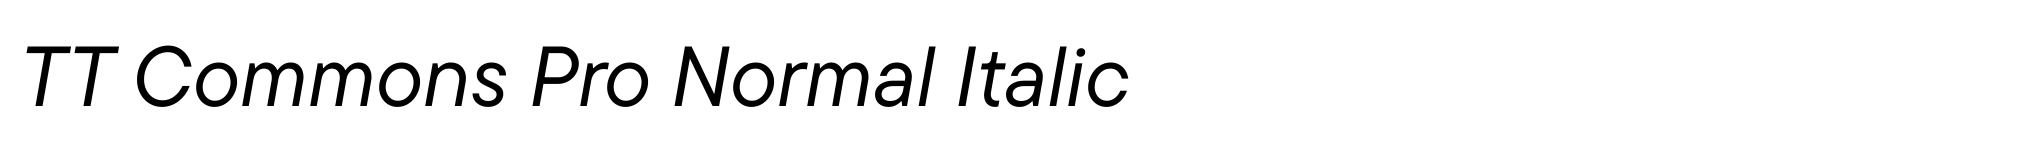 TT Commons Pro Normal Italic image